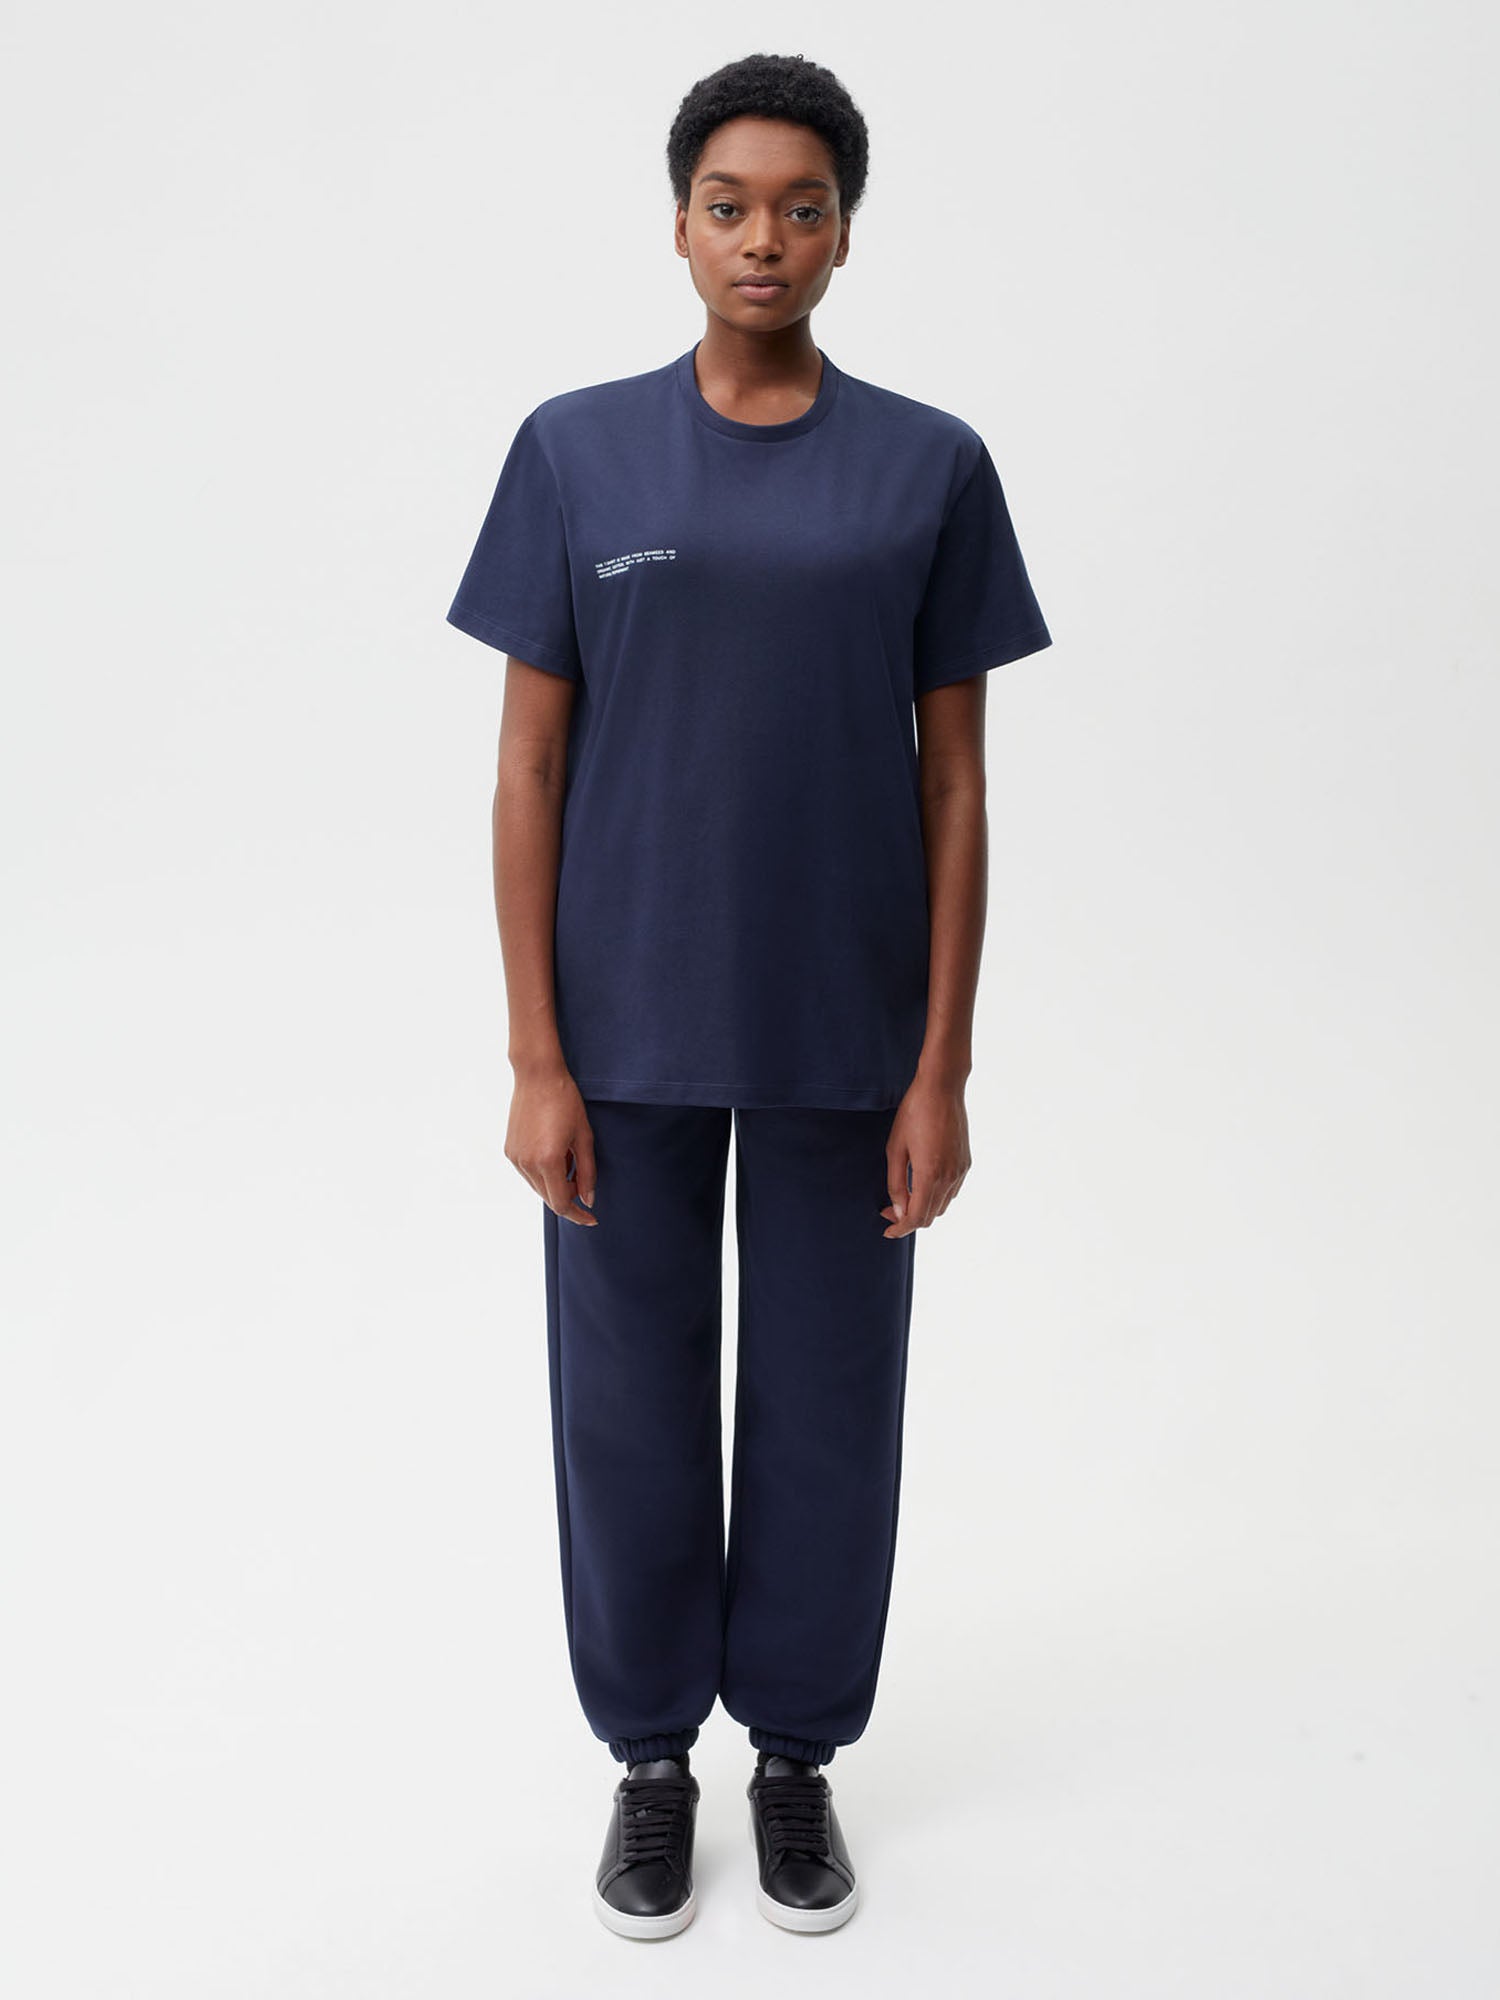 Seaweed-Fiber-T-Shirt-Navy-Blue-Female-1